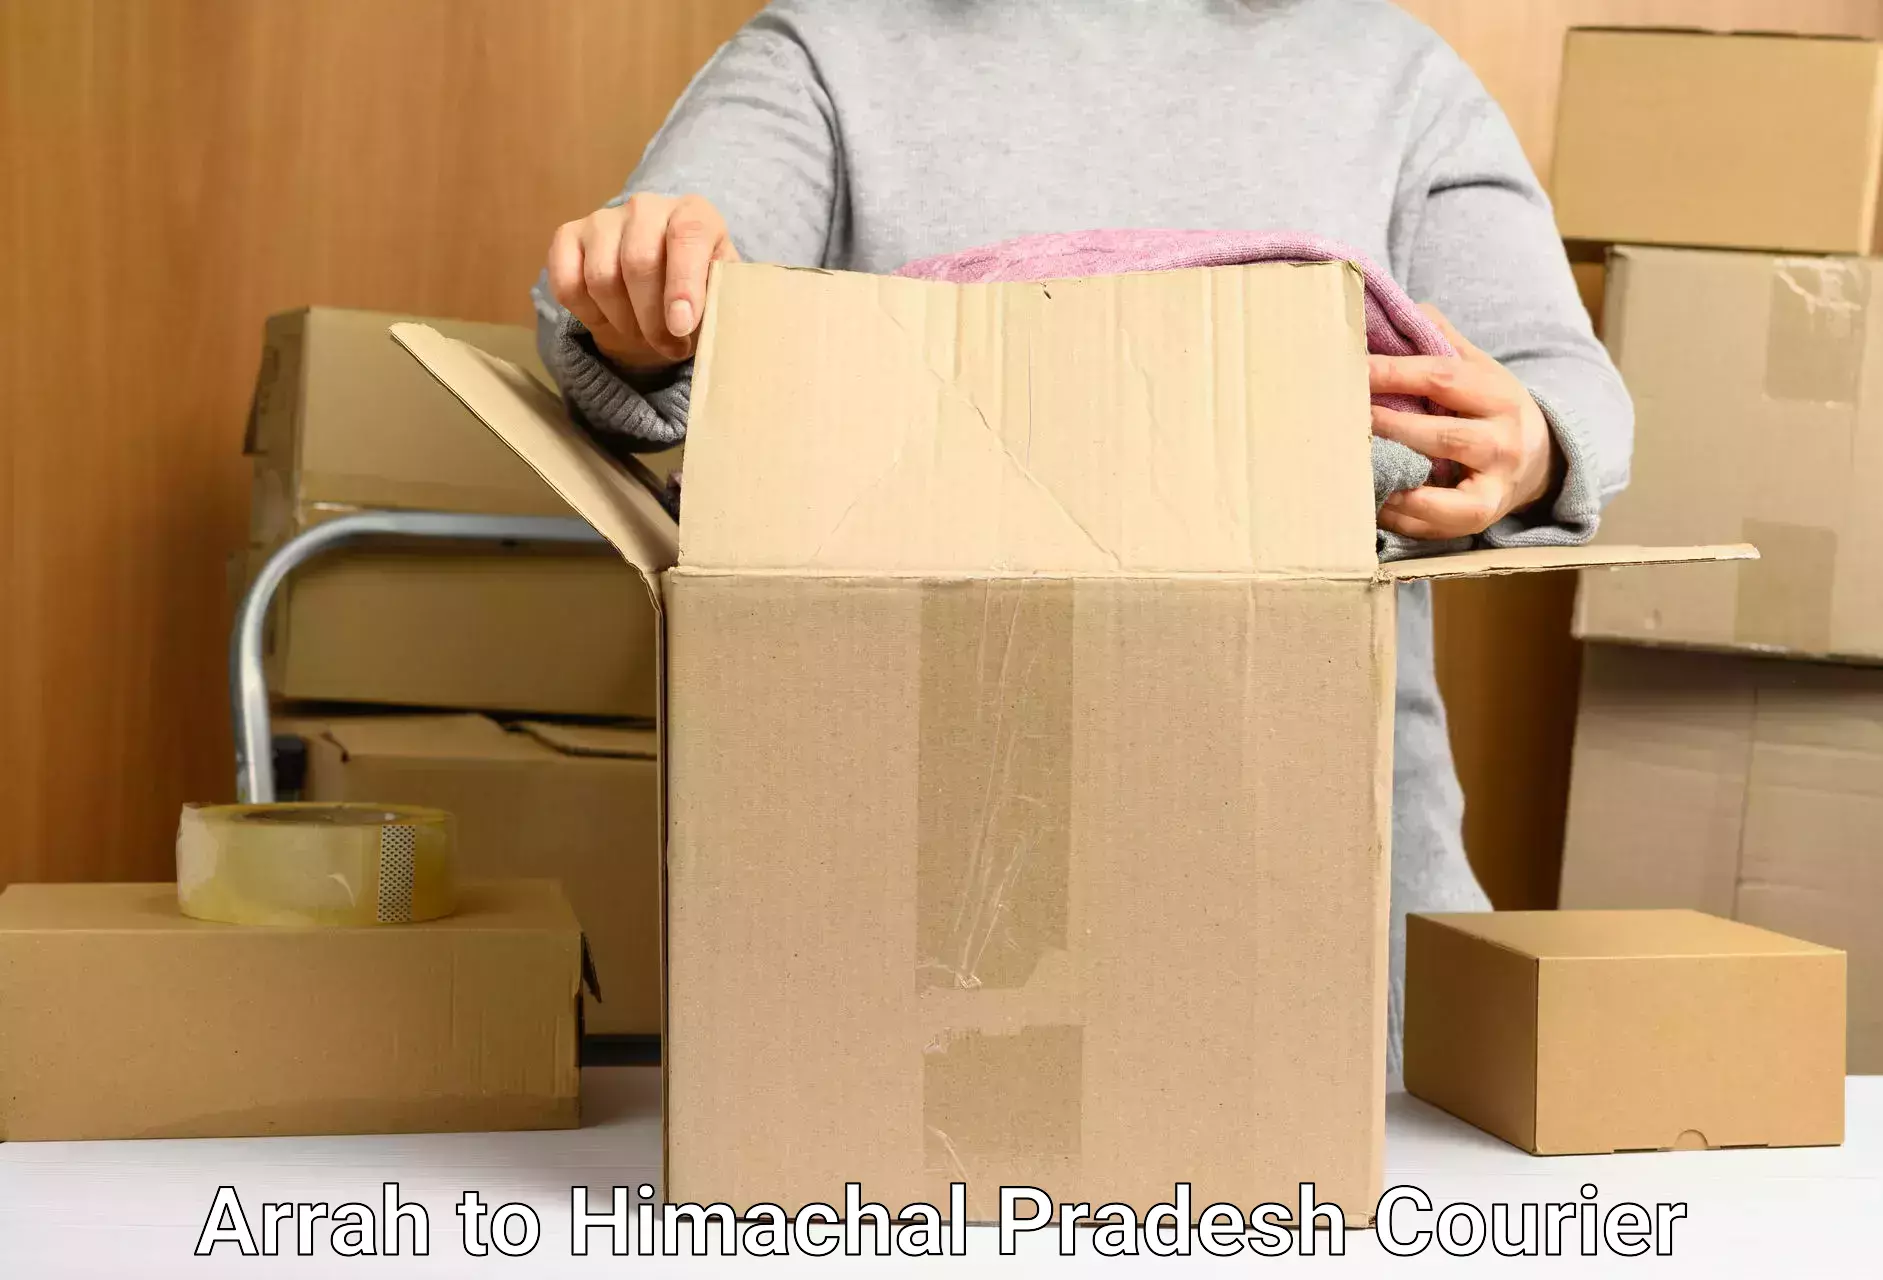 Efficient parcel tracking Arrah to Dheera